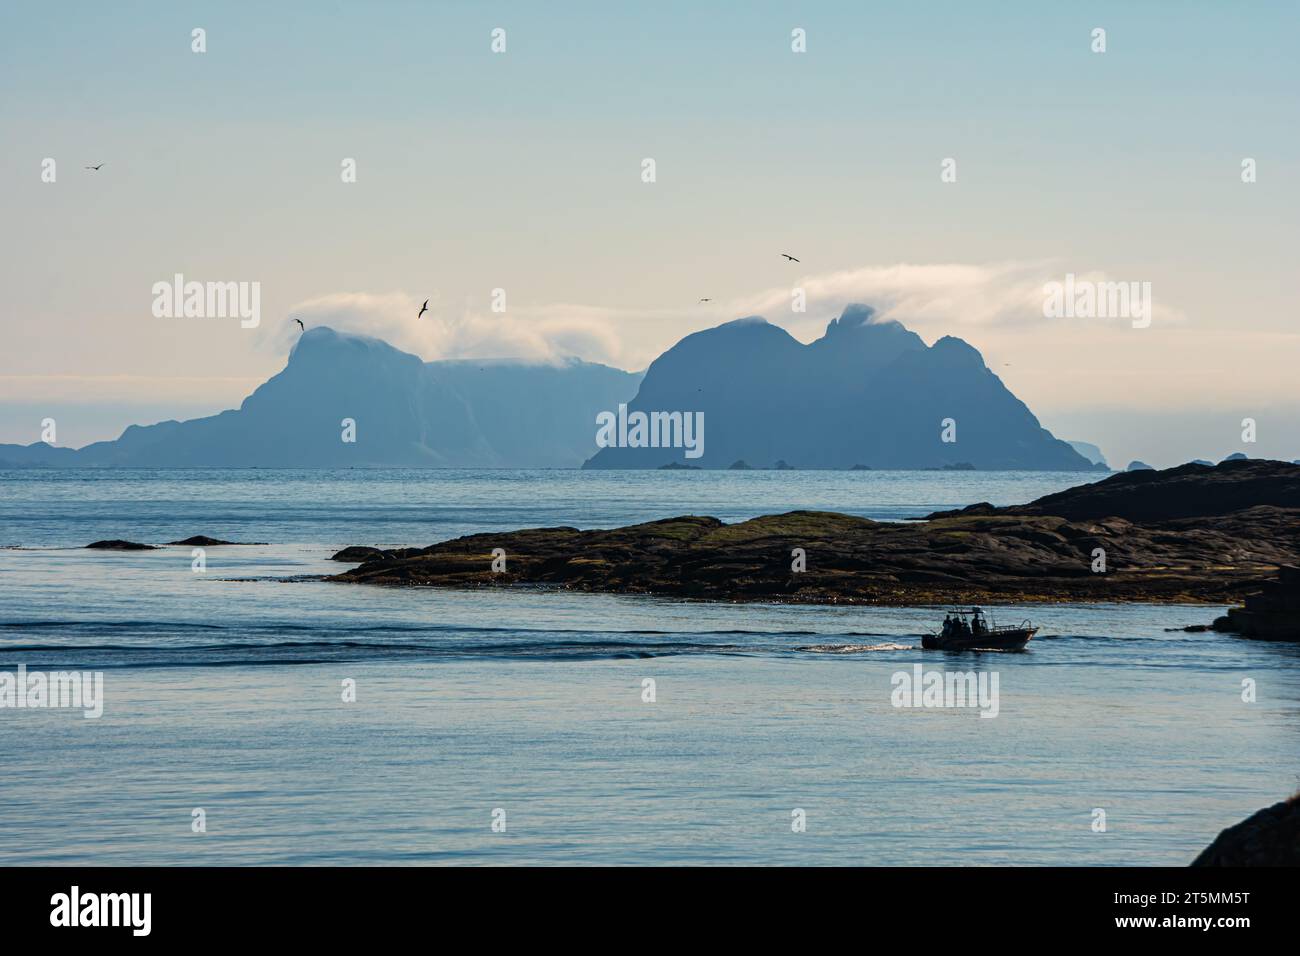 Distant mountains in Lofoten, hazy sky, boat, calm sea. Værøy in the distance. Stock Photo